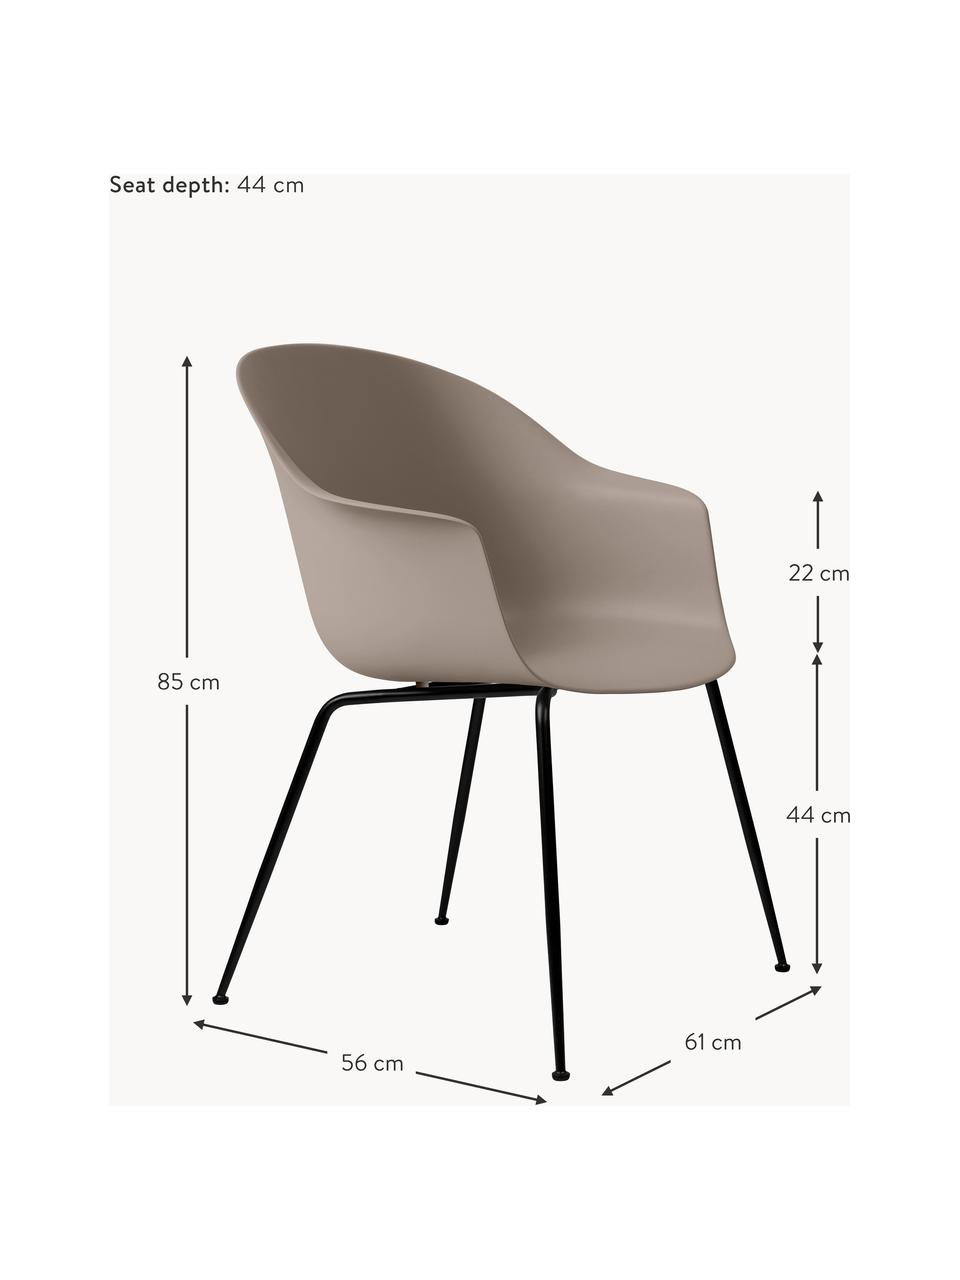 Židle s područkami Bat, Taupe, černá, Š 61 cm, H 56 cm